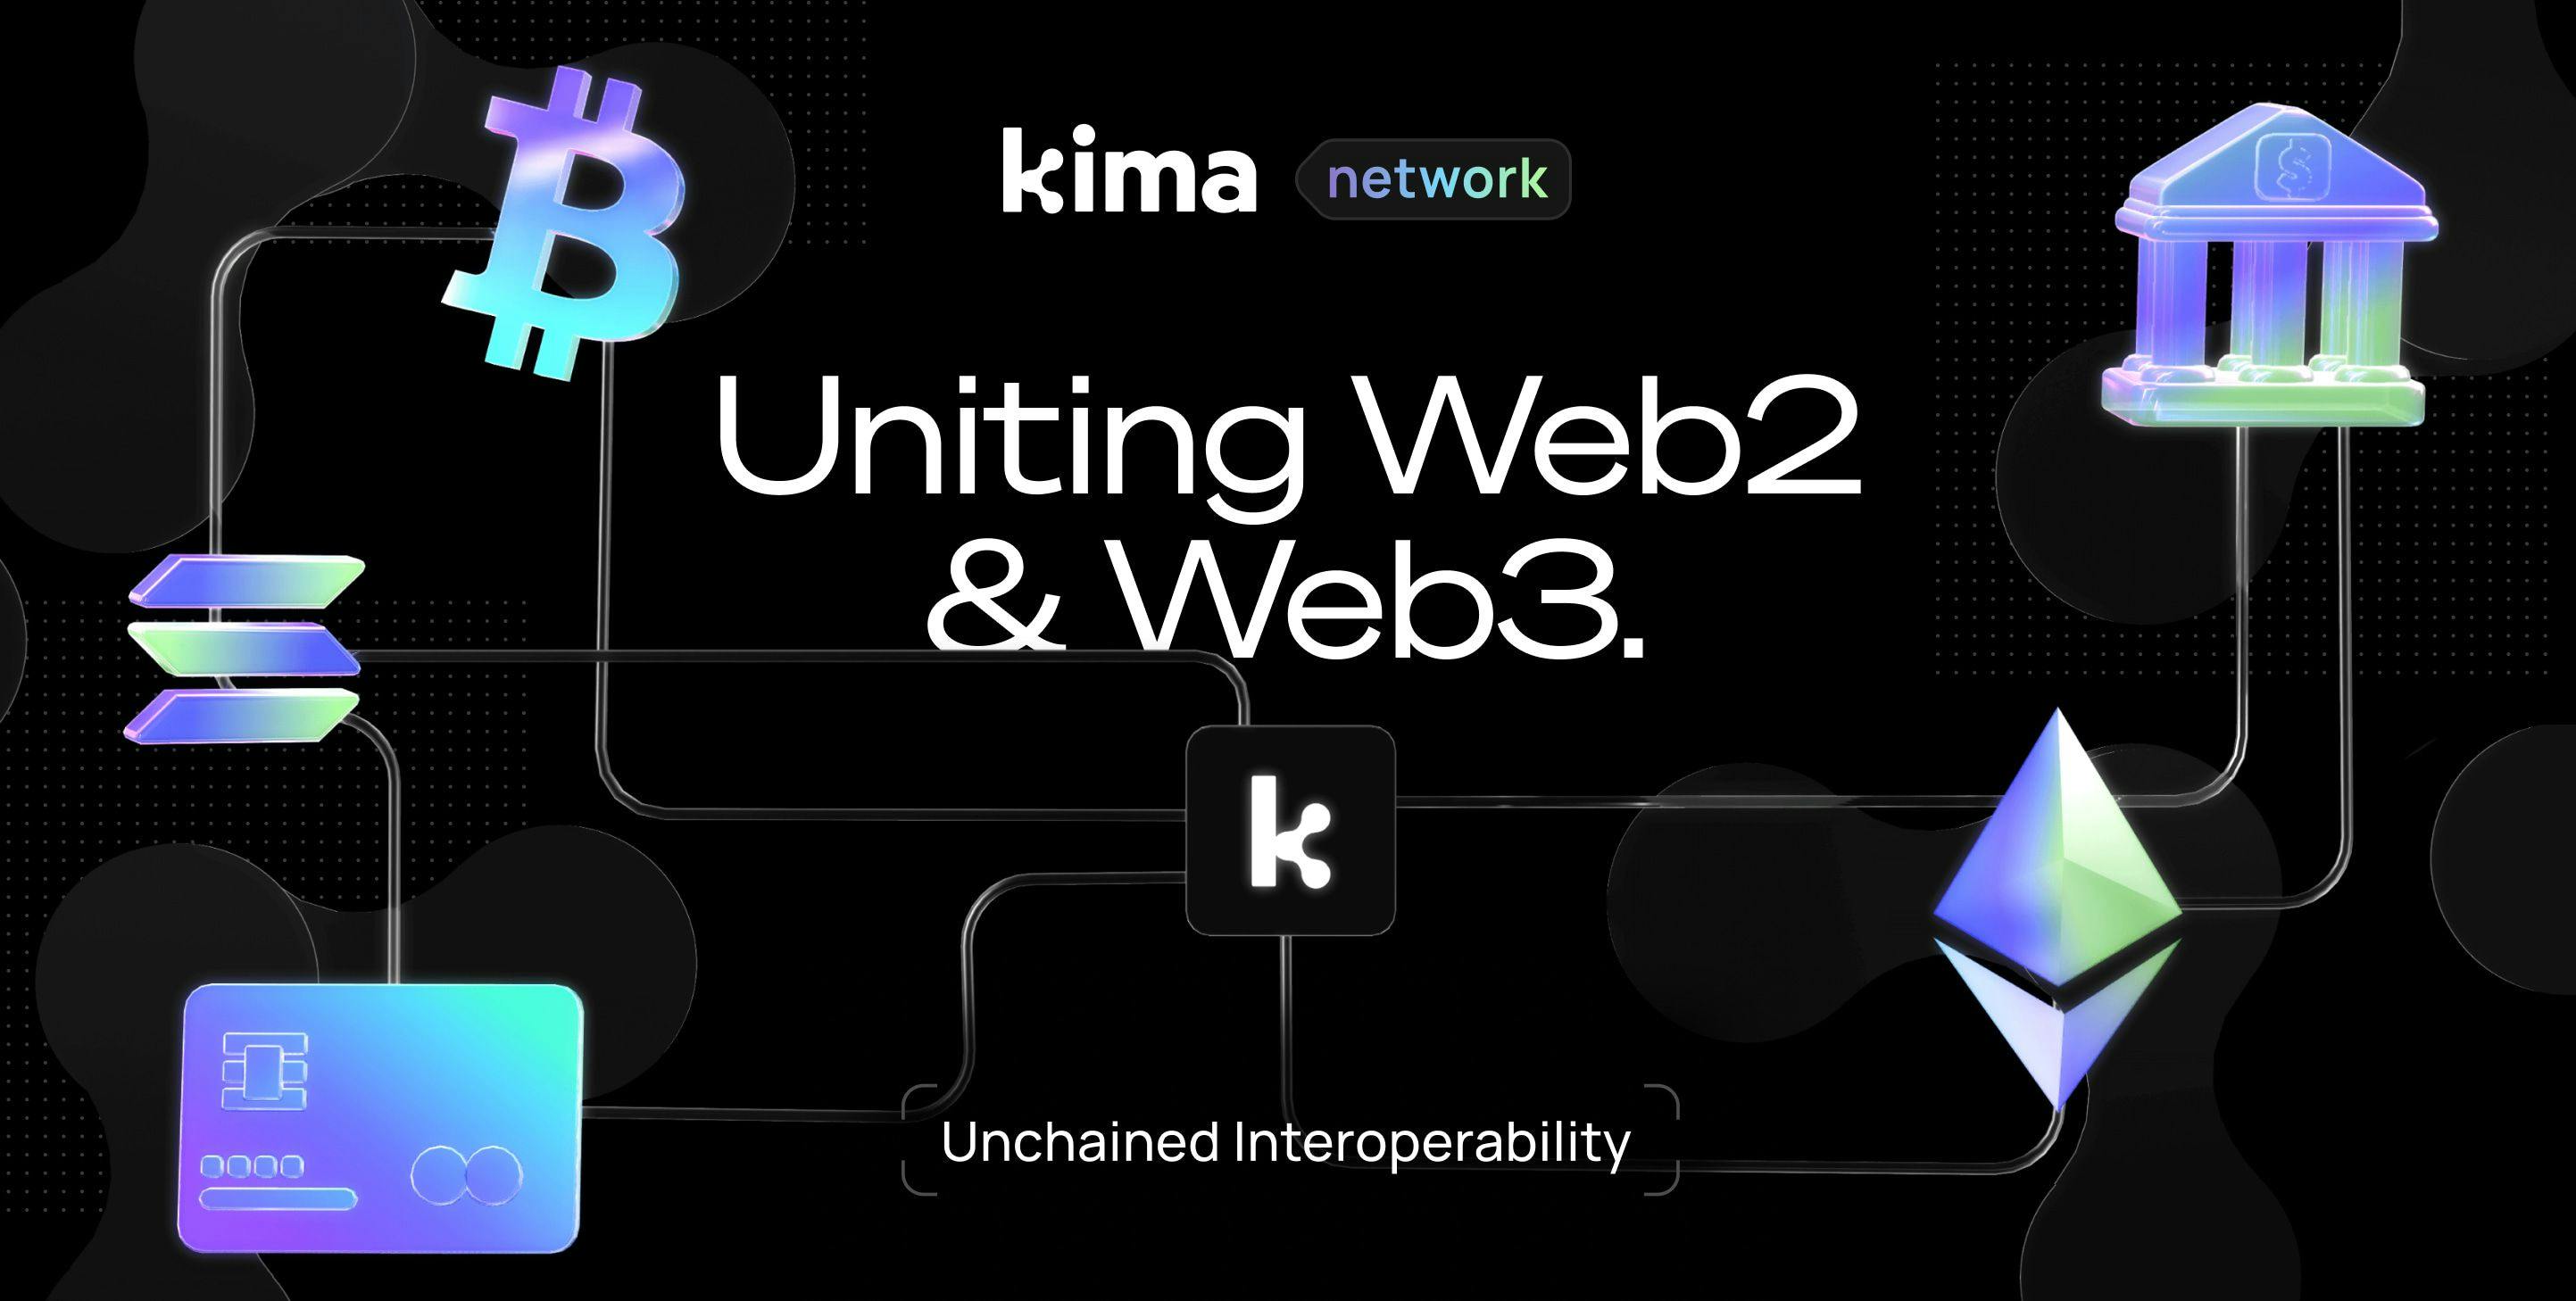  Kima Network Image #1